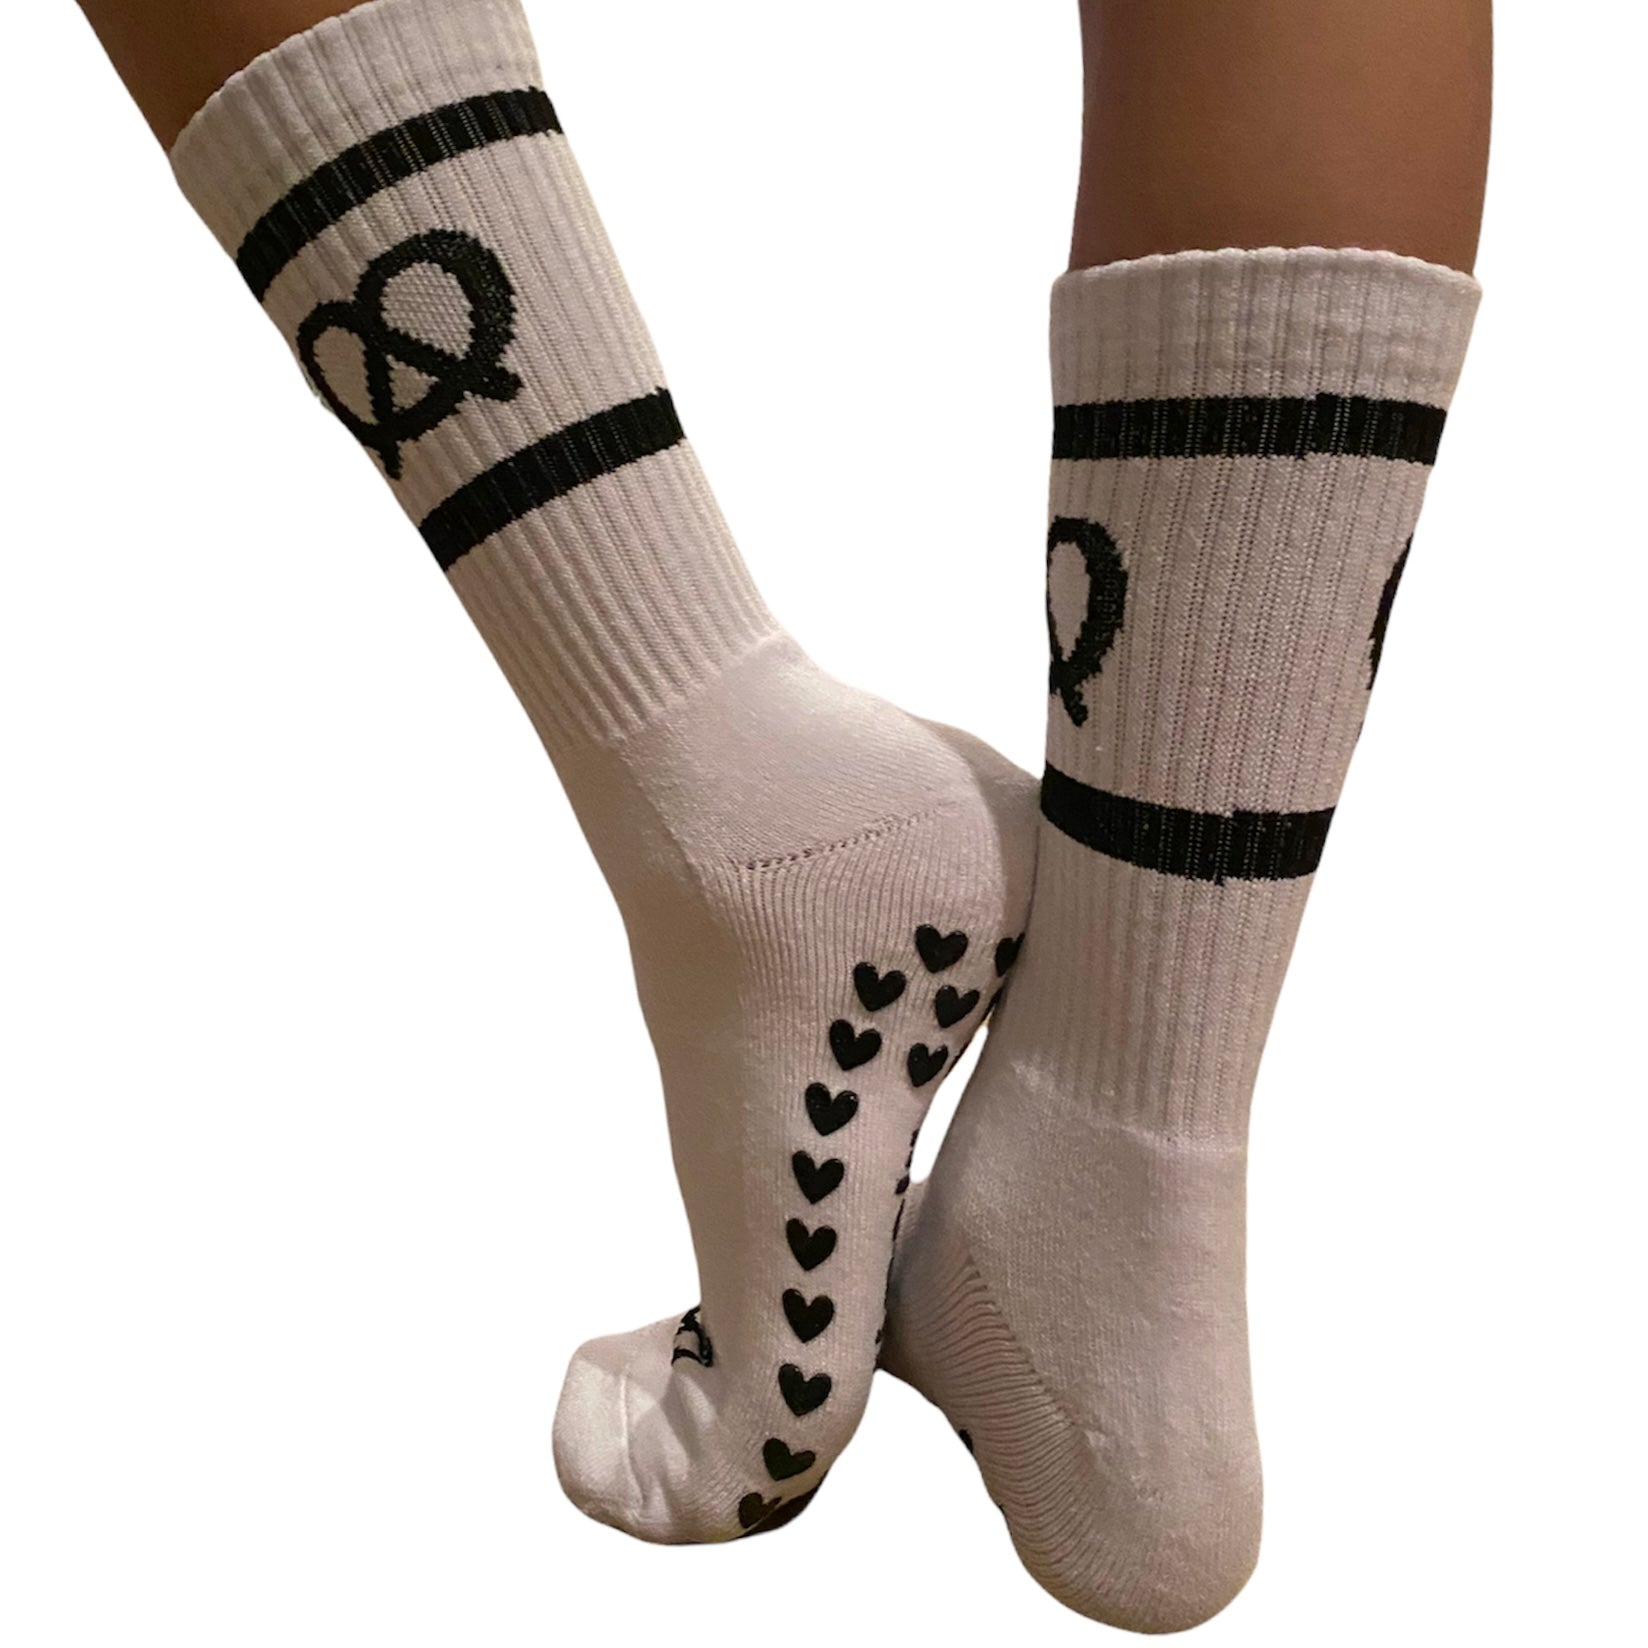 PRETZEL socks (S/M) – navy